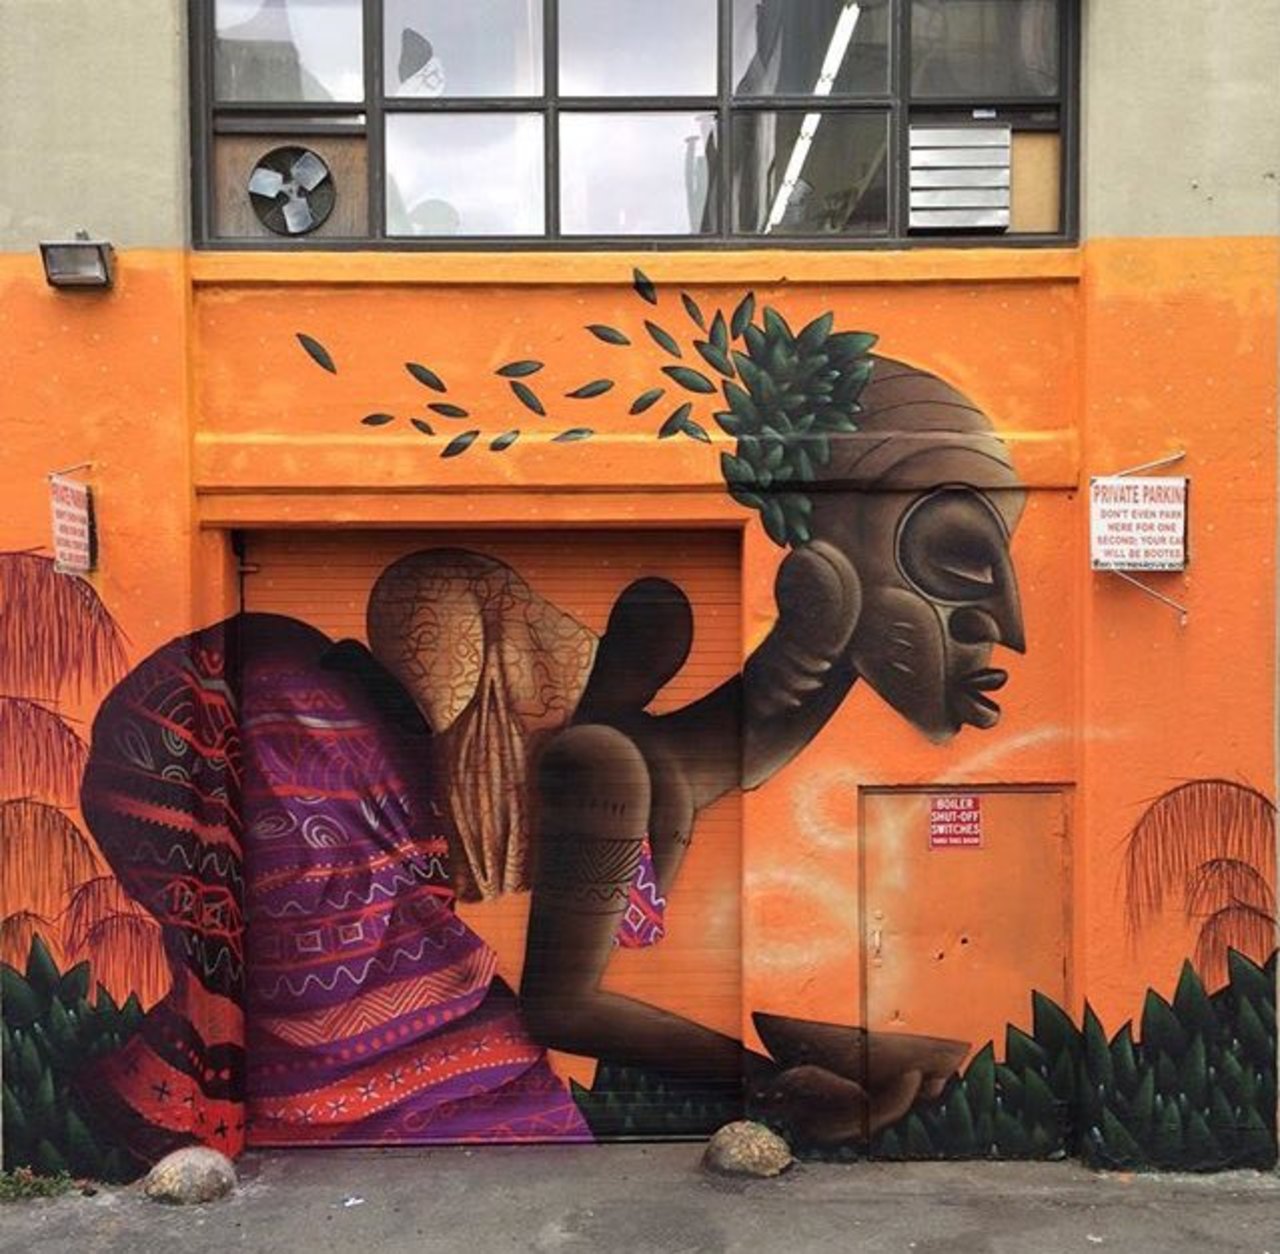 RT @GoogleStreetArt: New Street Art by Alexandre Keto in NYC 

#art #graffiti #mural #streetart https://t.co/oMgBX8eLoe